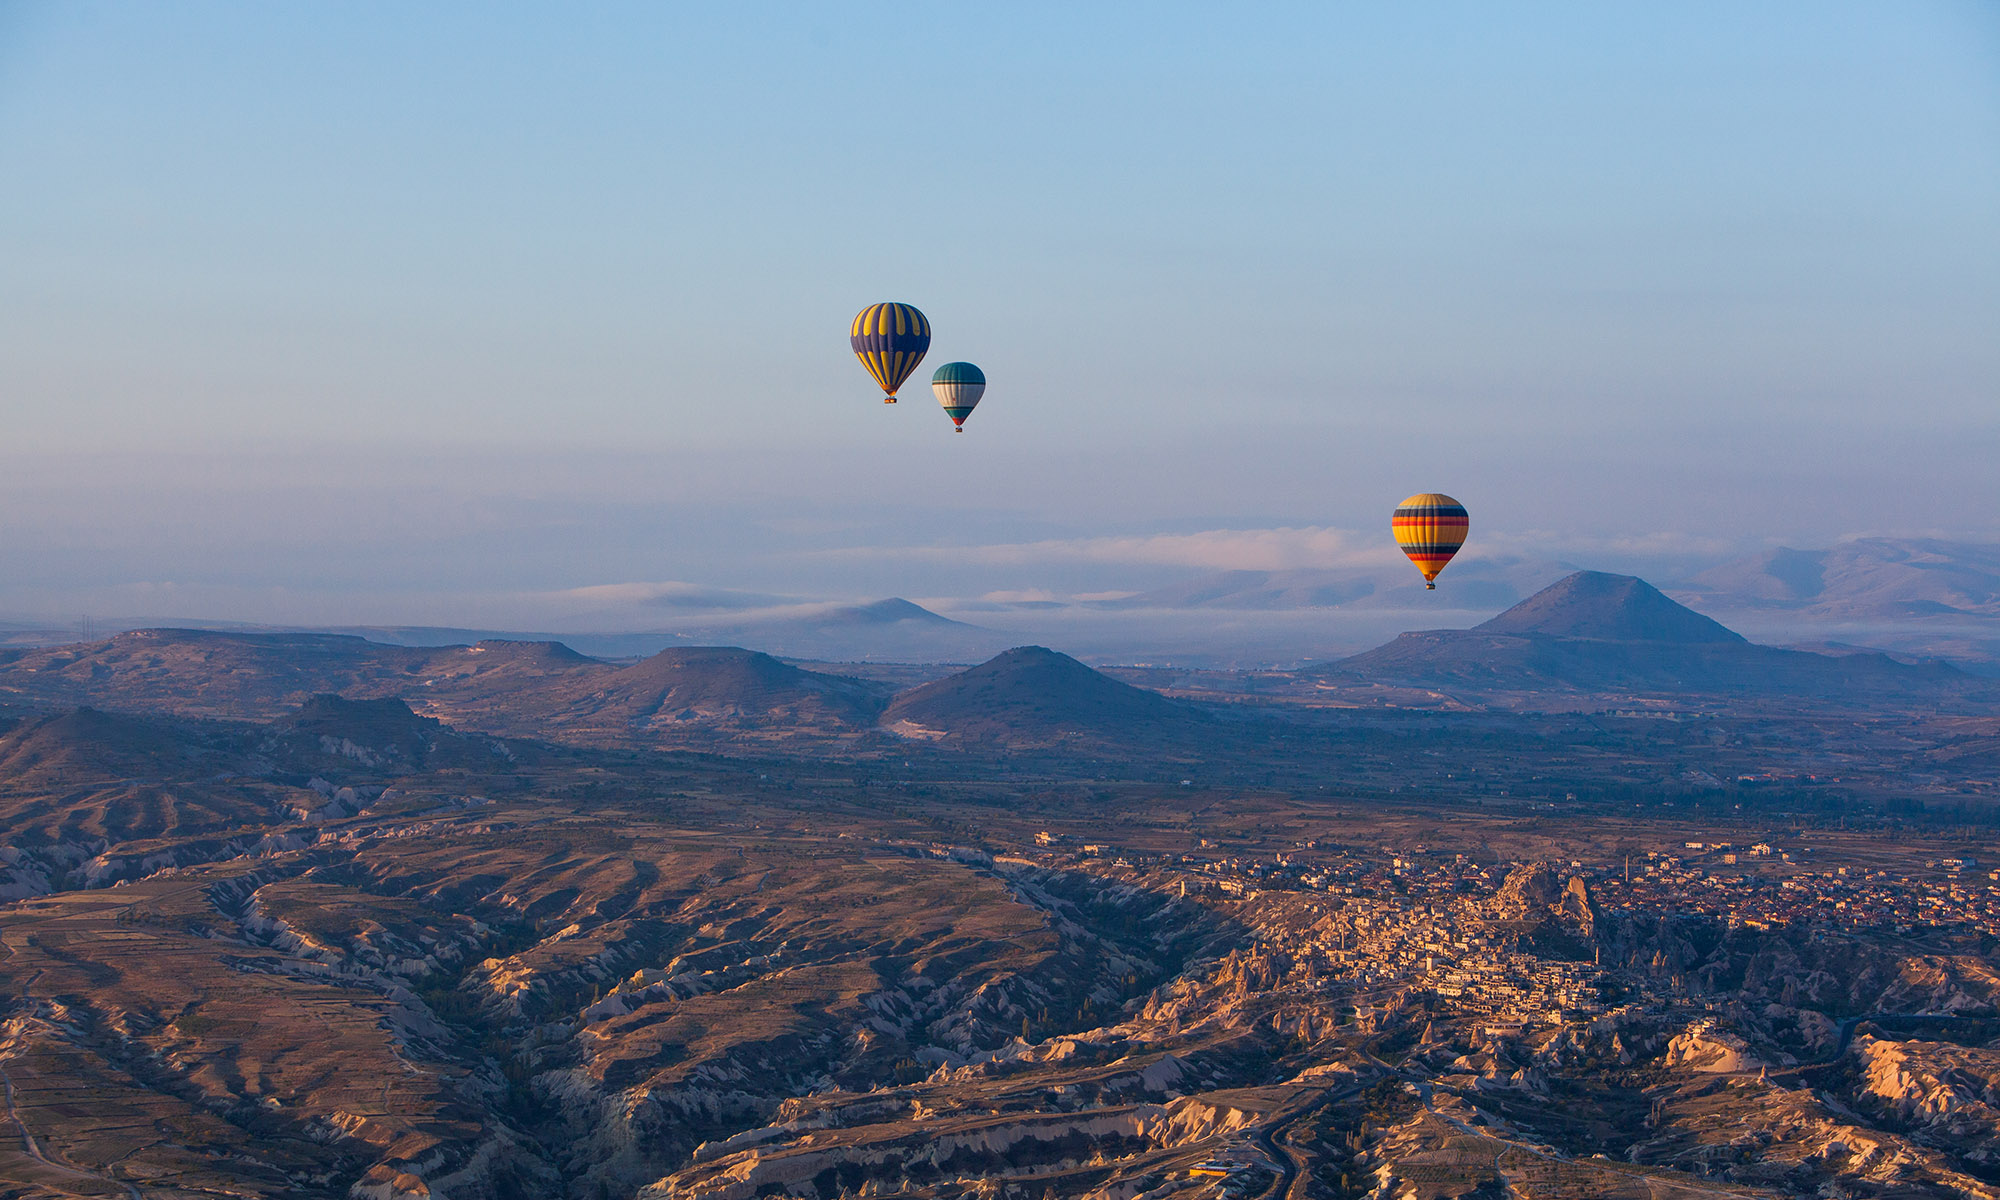 Three hot air balloons raising above the rough landscape of Cappadocia, Turkey at sunrise